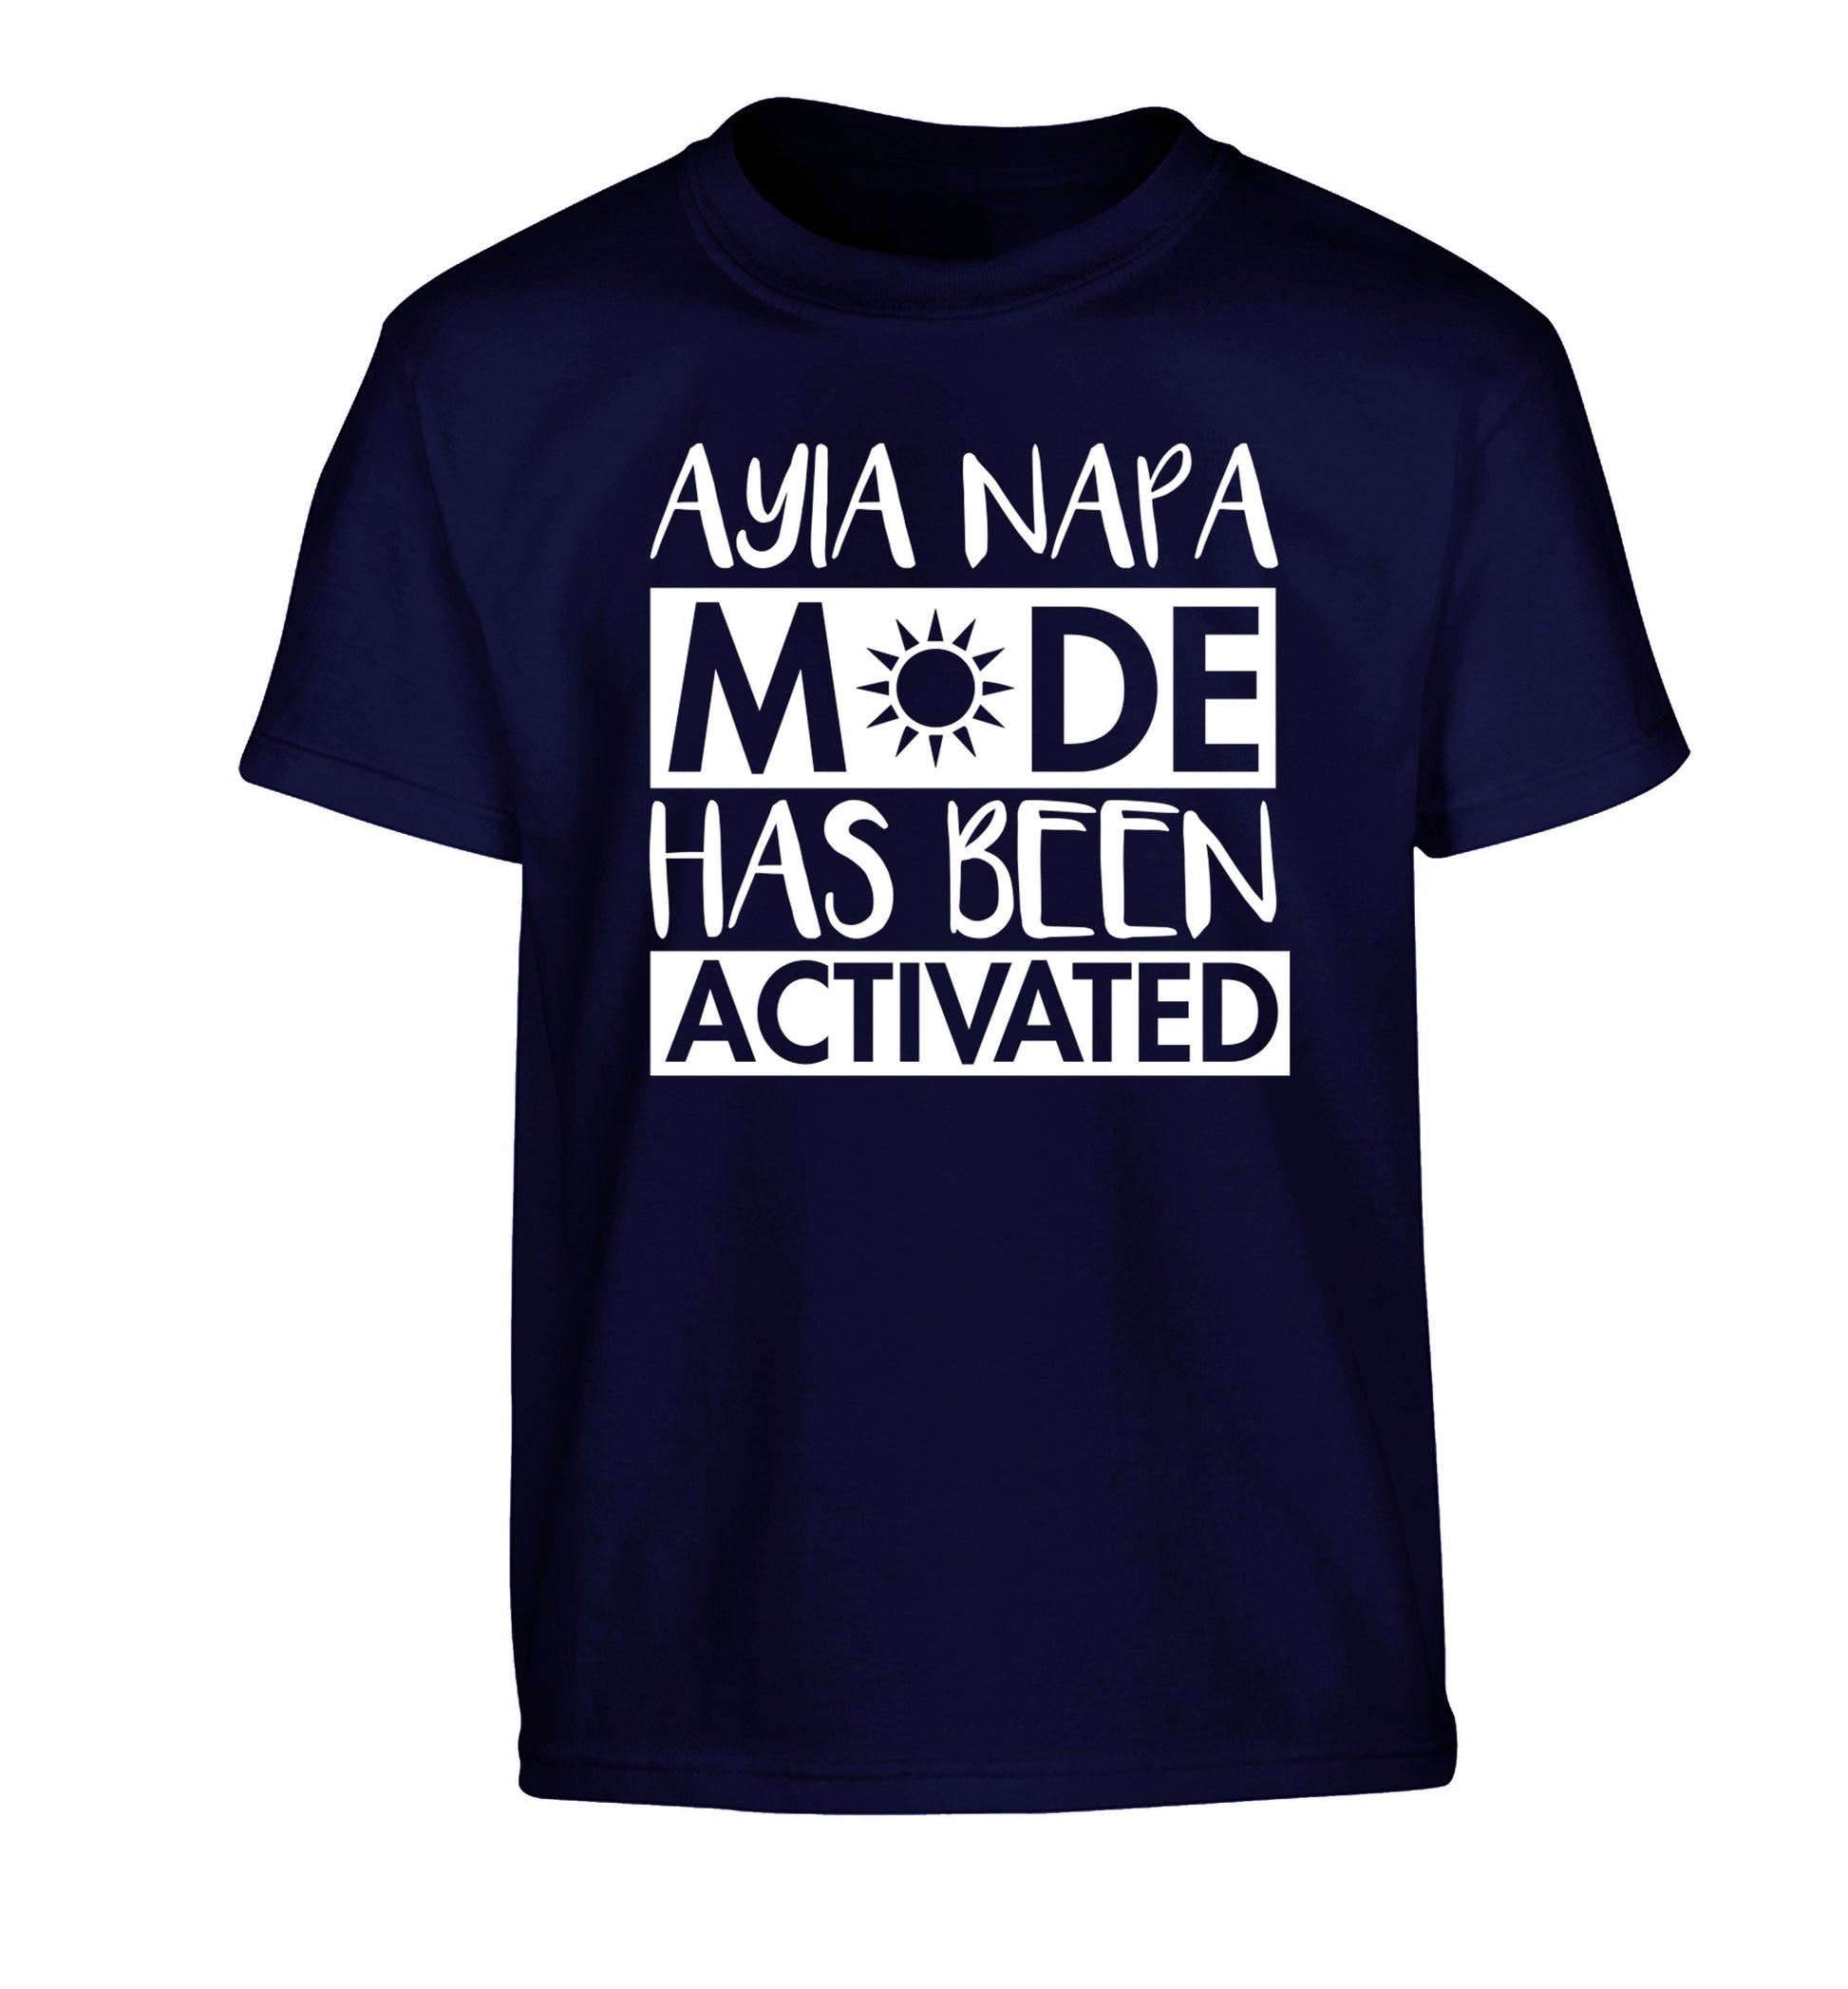 Aiya Napa mode has been activated Children's navy Tshirt 12-14 Years